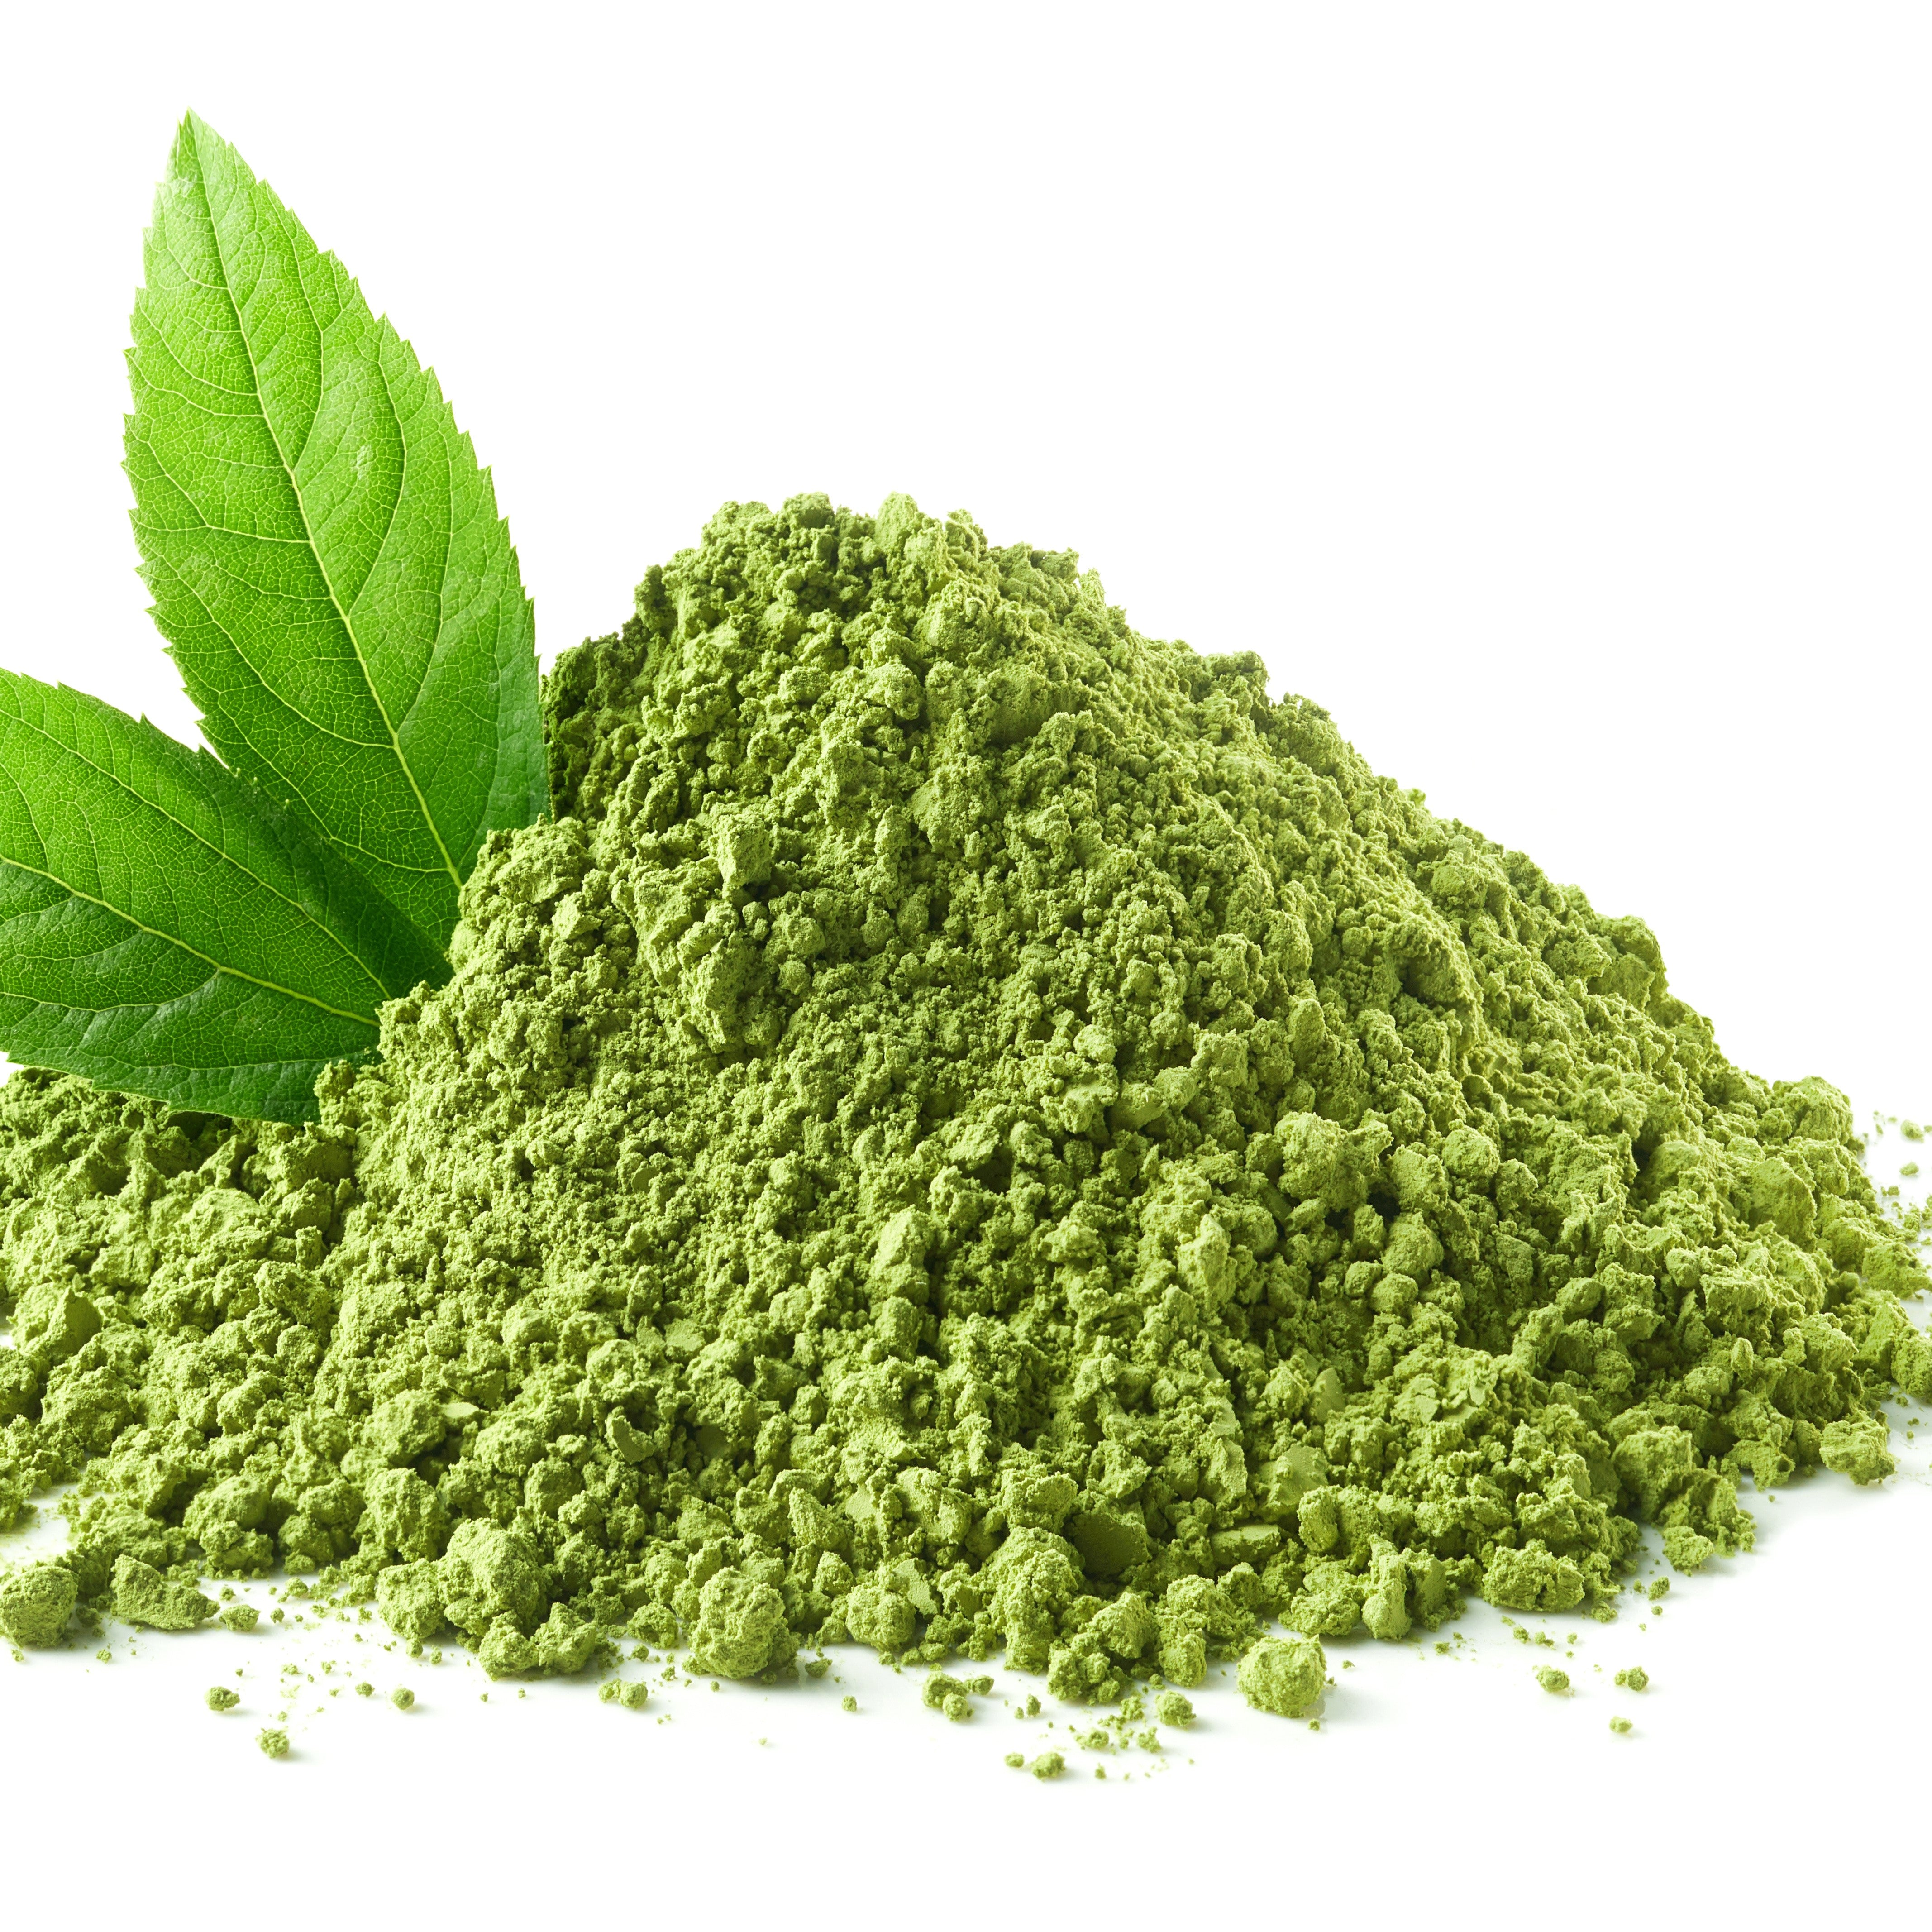 Green Tea Essential Oil